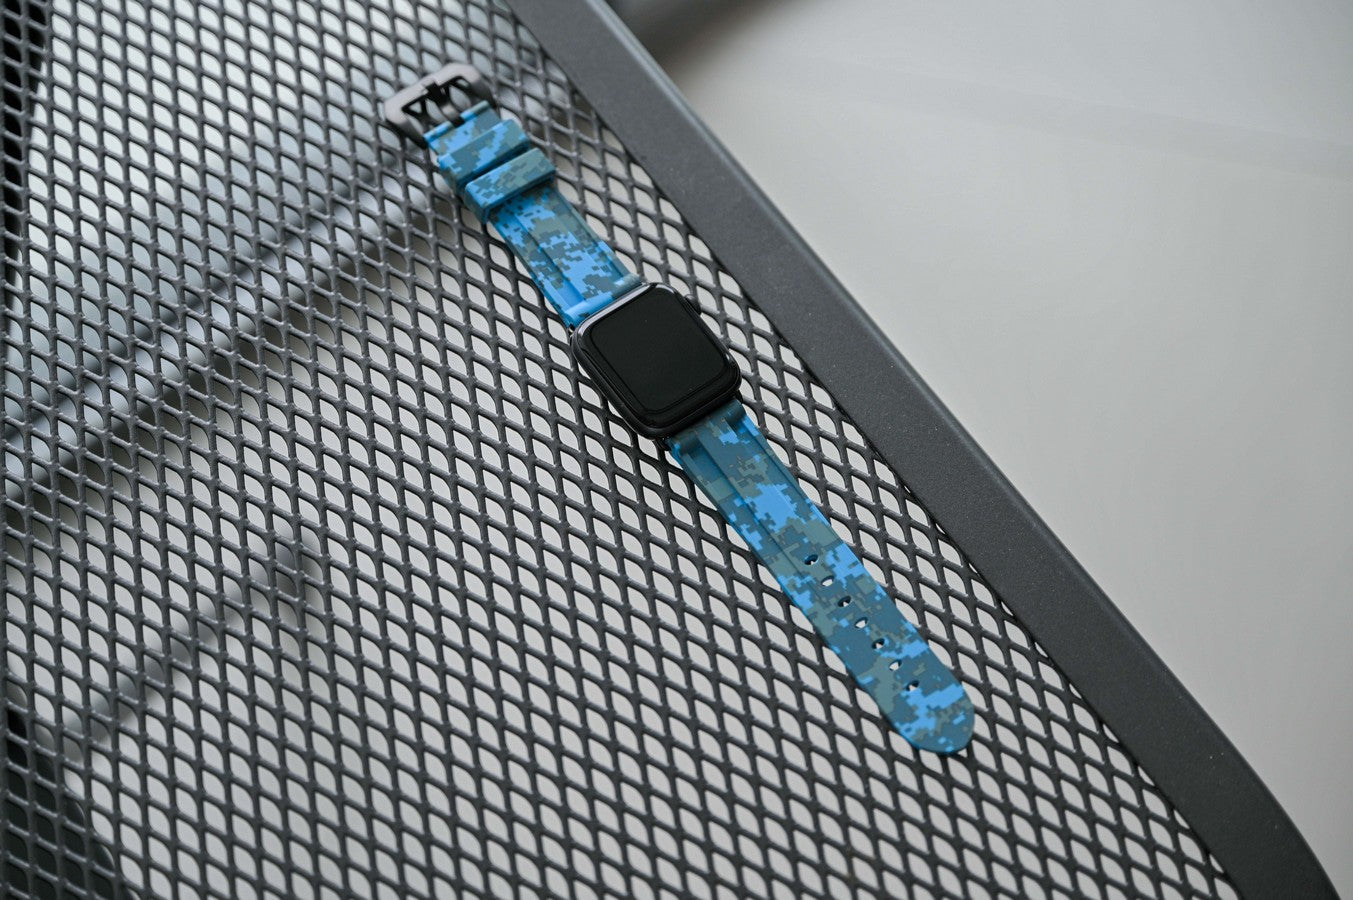 Miami Blue Digital Camo Apple Watch Strap - Apple Watch Strap - Le Luxe Straps